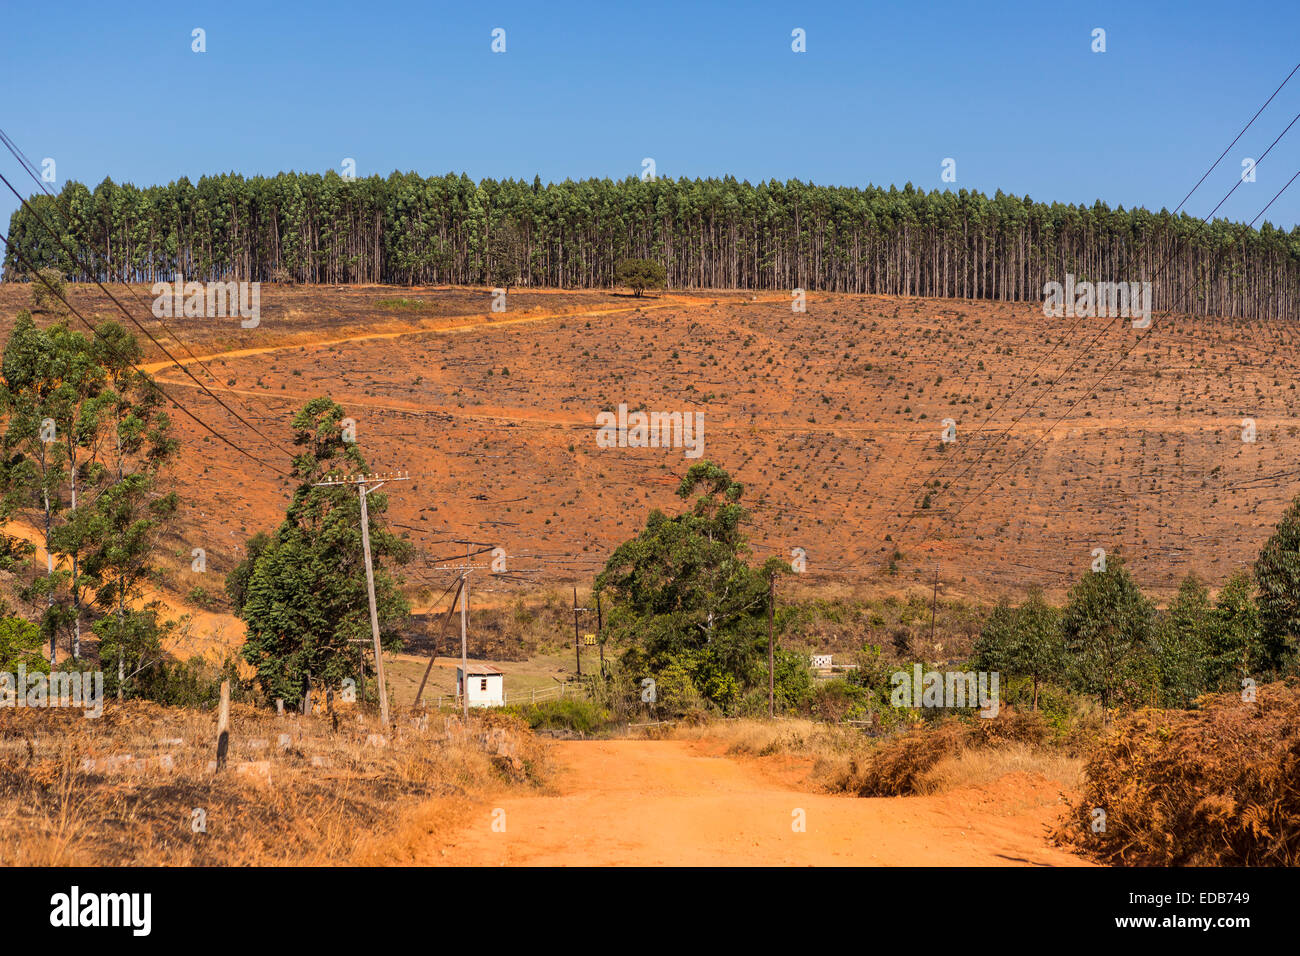 HHOHHO, Swasiland, Südafrika - Holz Industrielandschaft, Bäume und Kahlschlag. Stockfoto